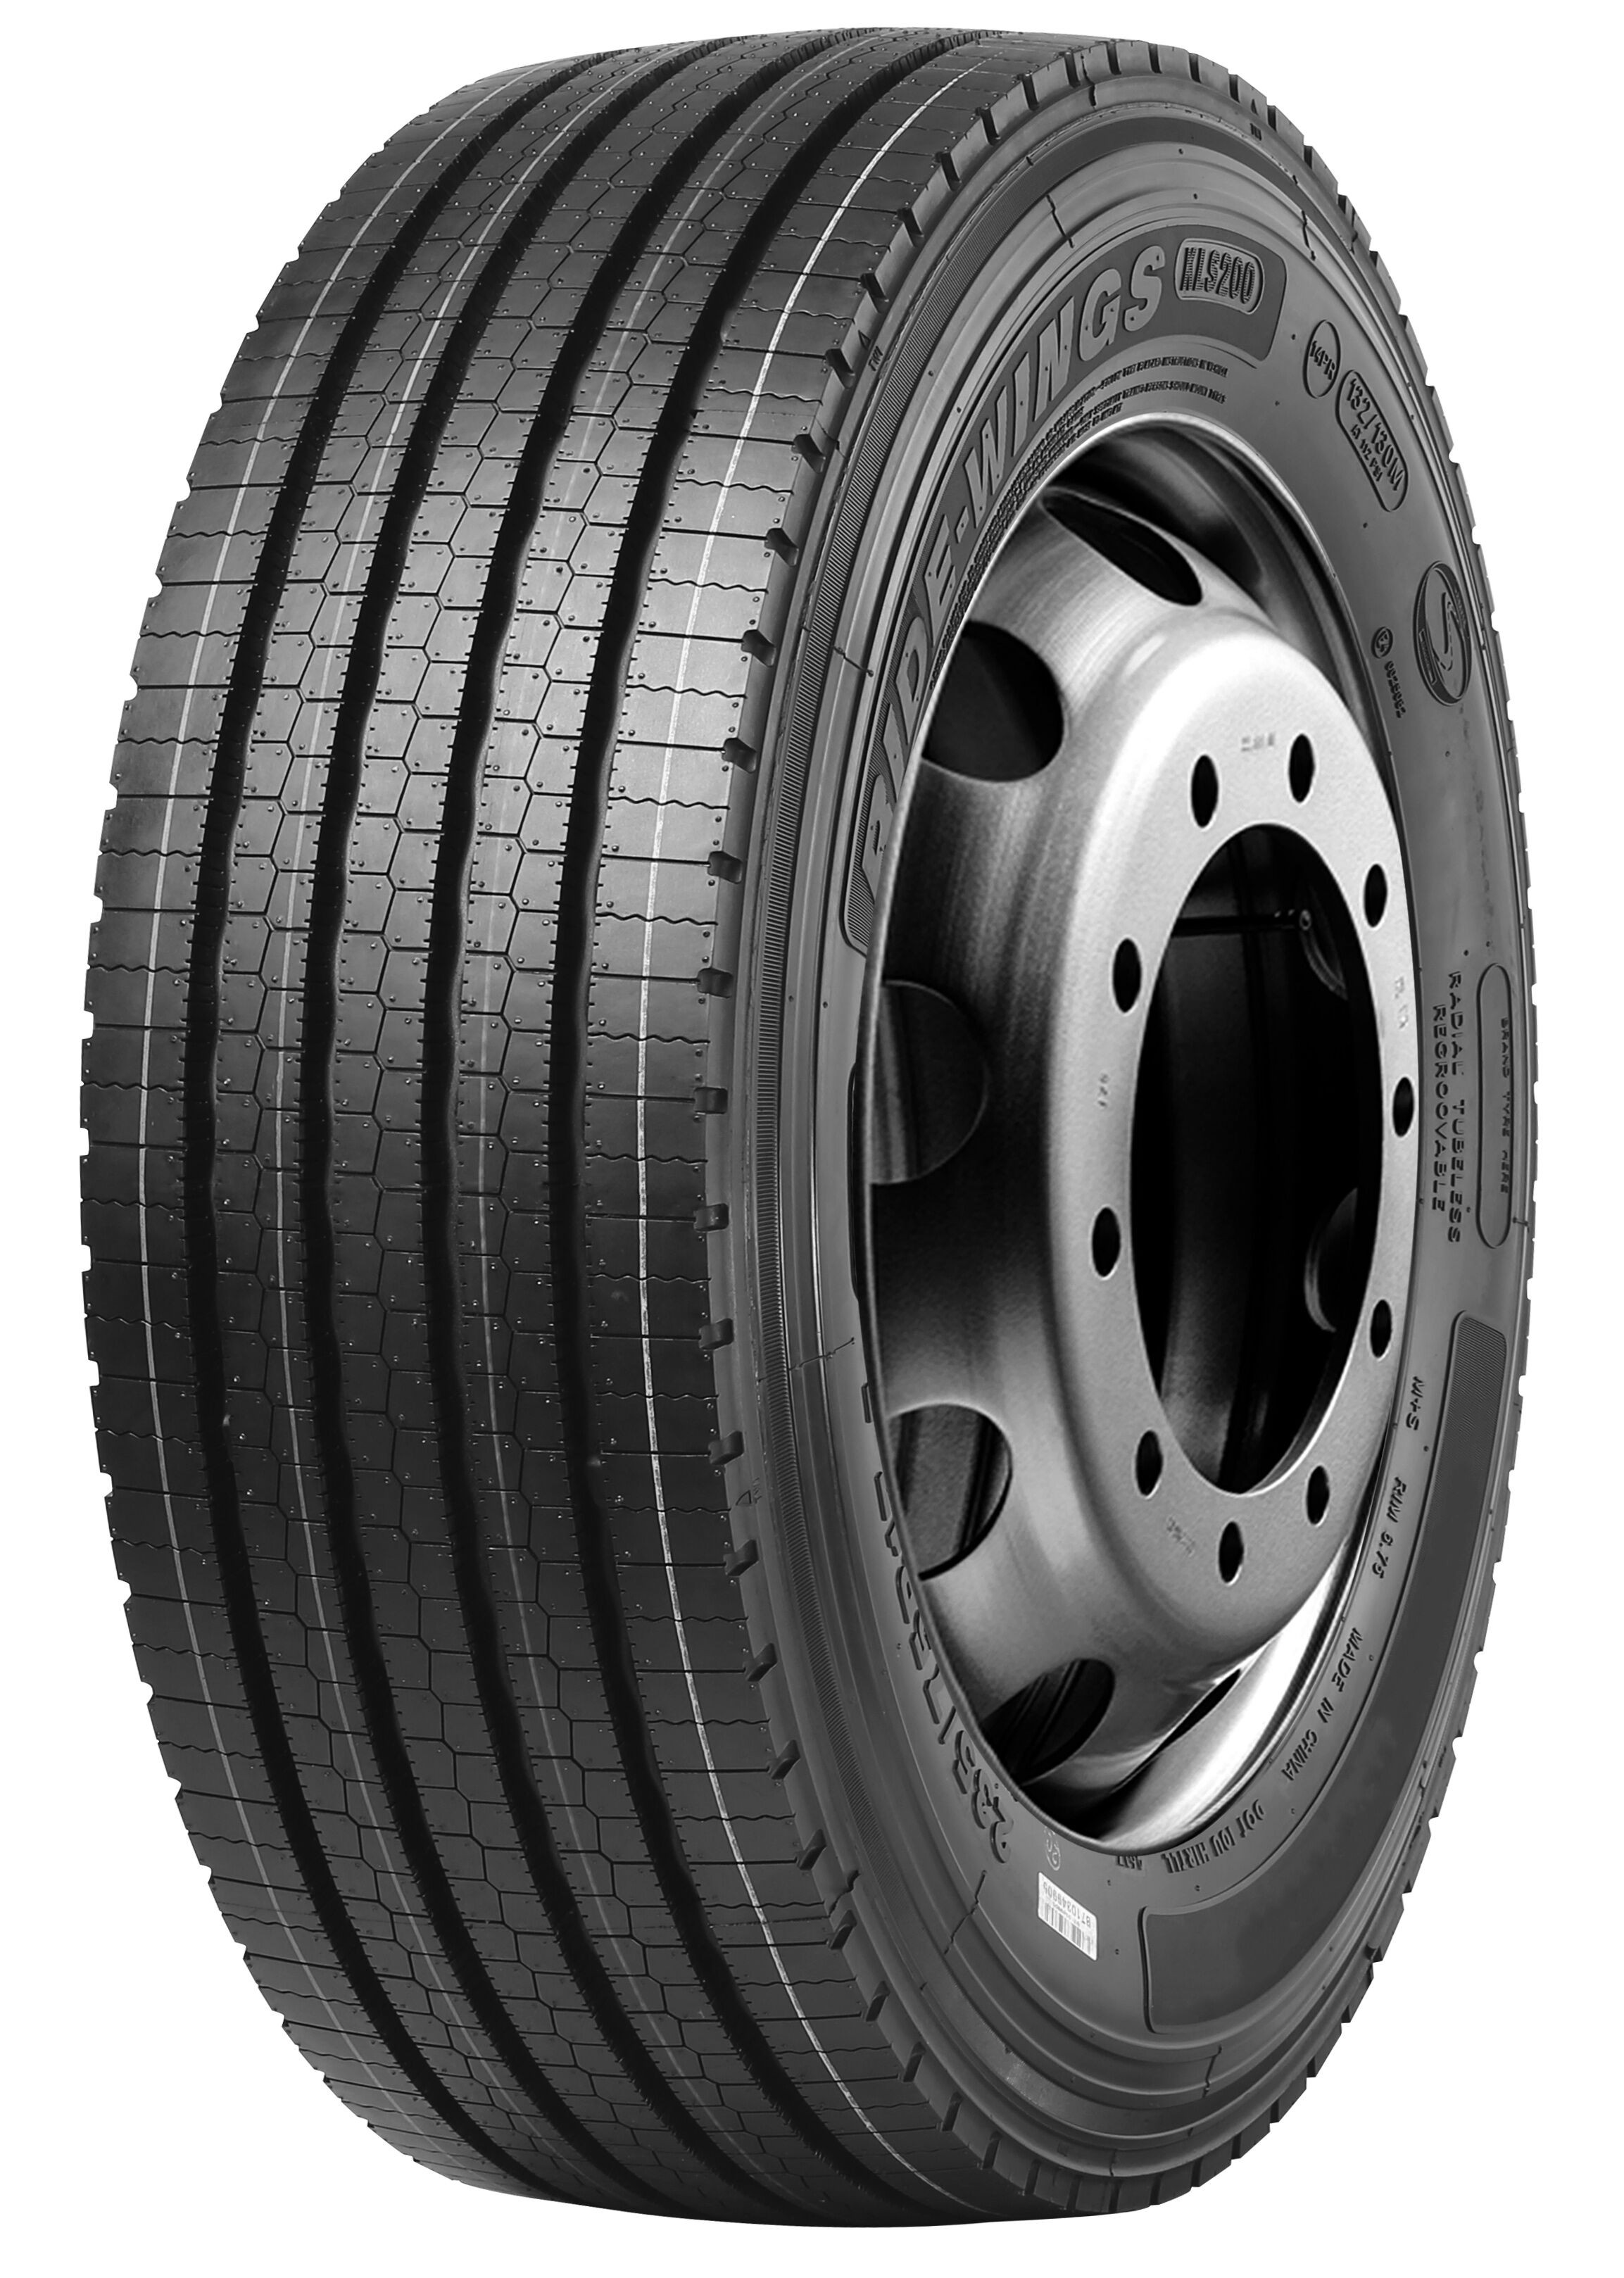 Gomme Nuove Benchmark 235/75 R17.5 132/130M 14PR KLS200 M+S (8.00mm) pneumatici nuovi Estivo